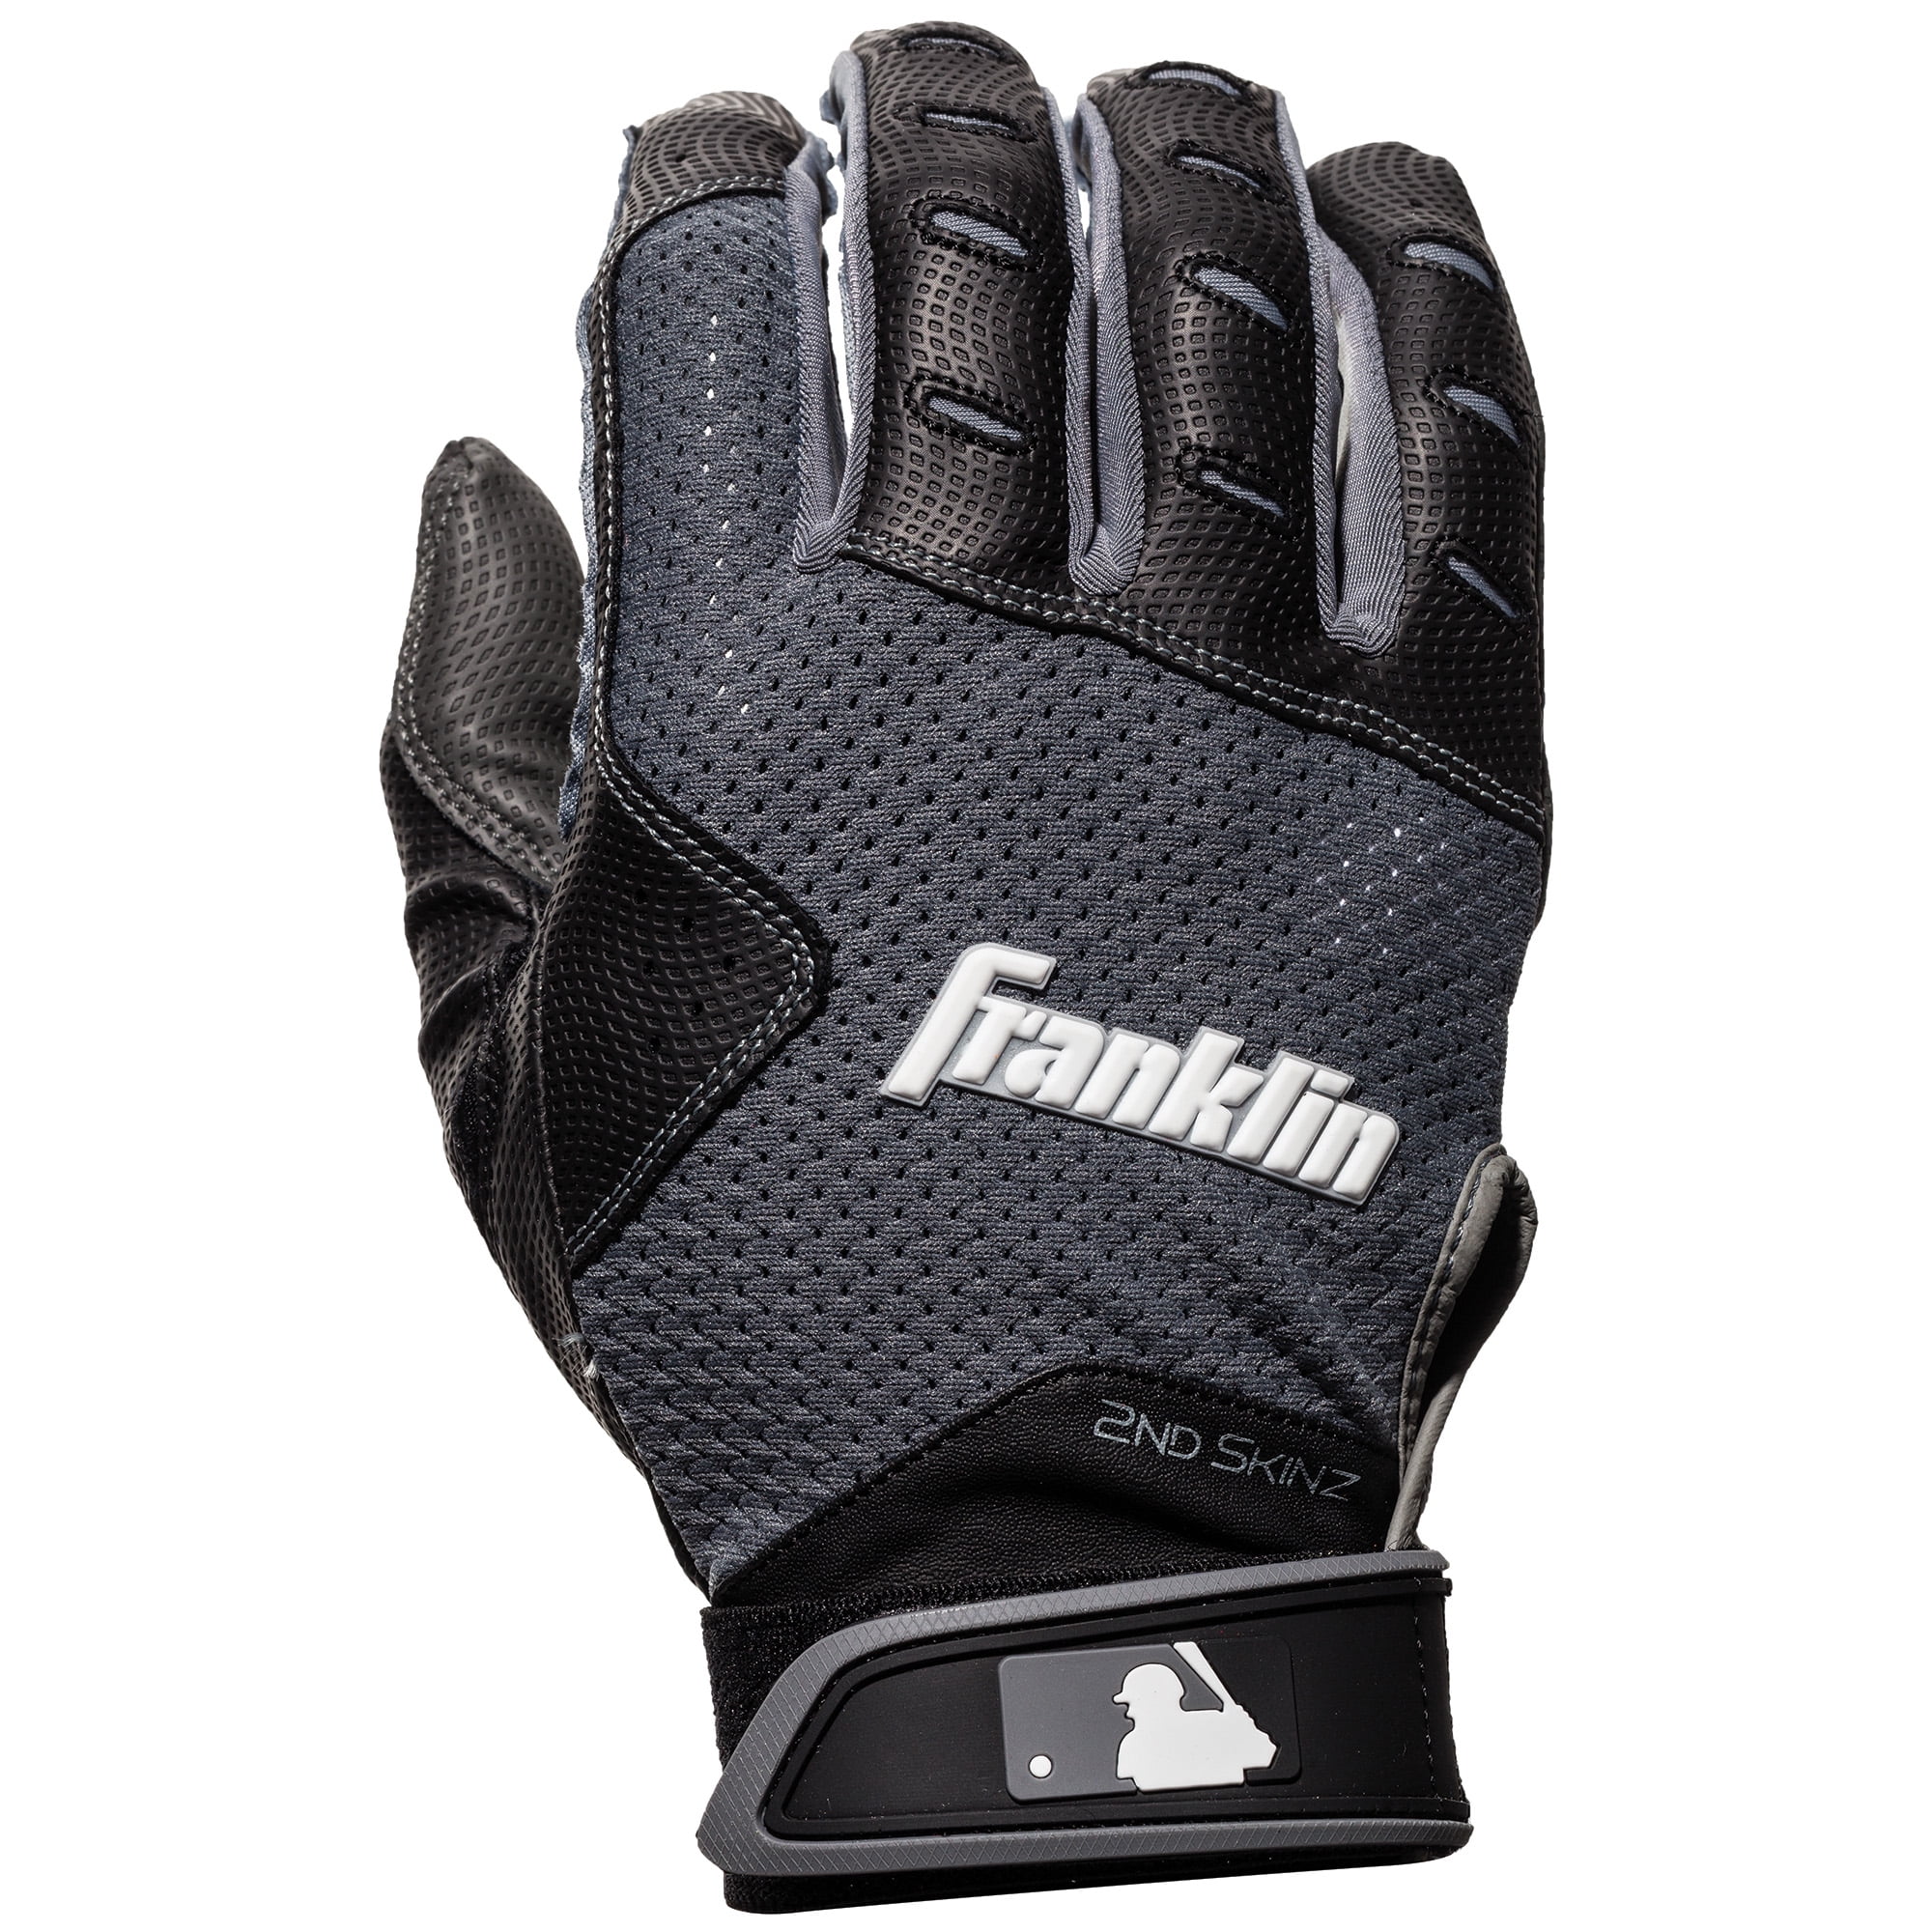 Franklin Sports 2nd Skinz XT Adult Batting Gloves, Small - Black/Gray